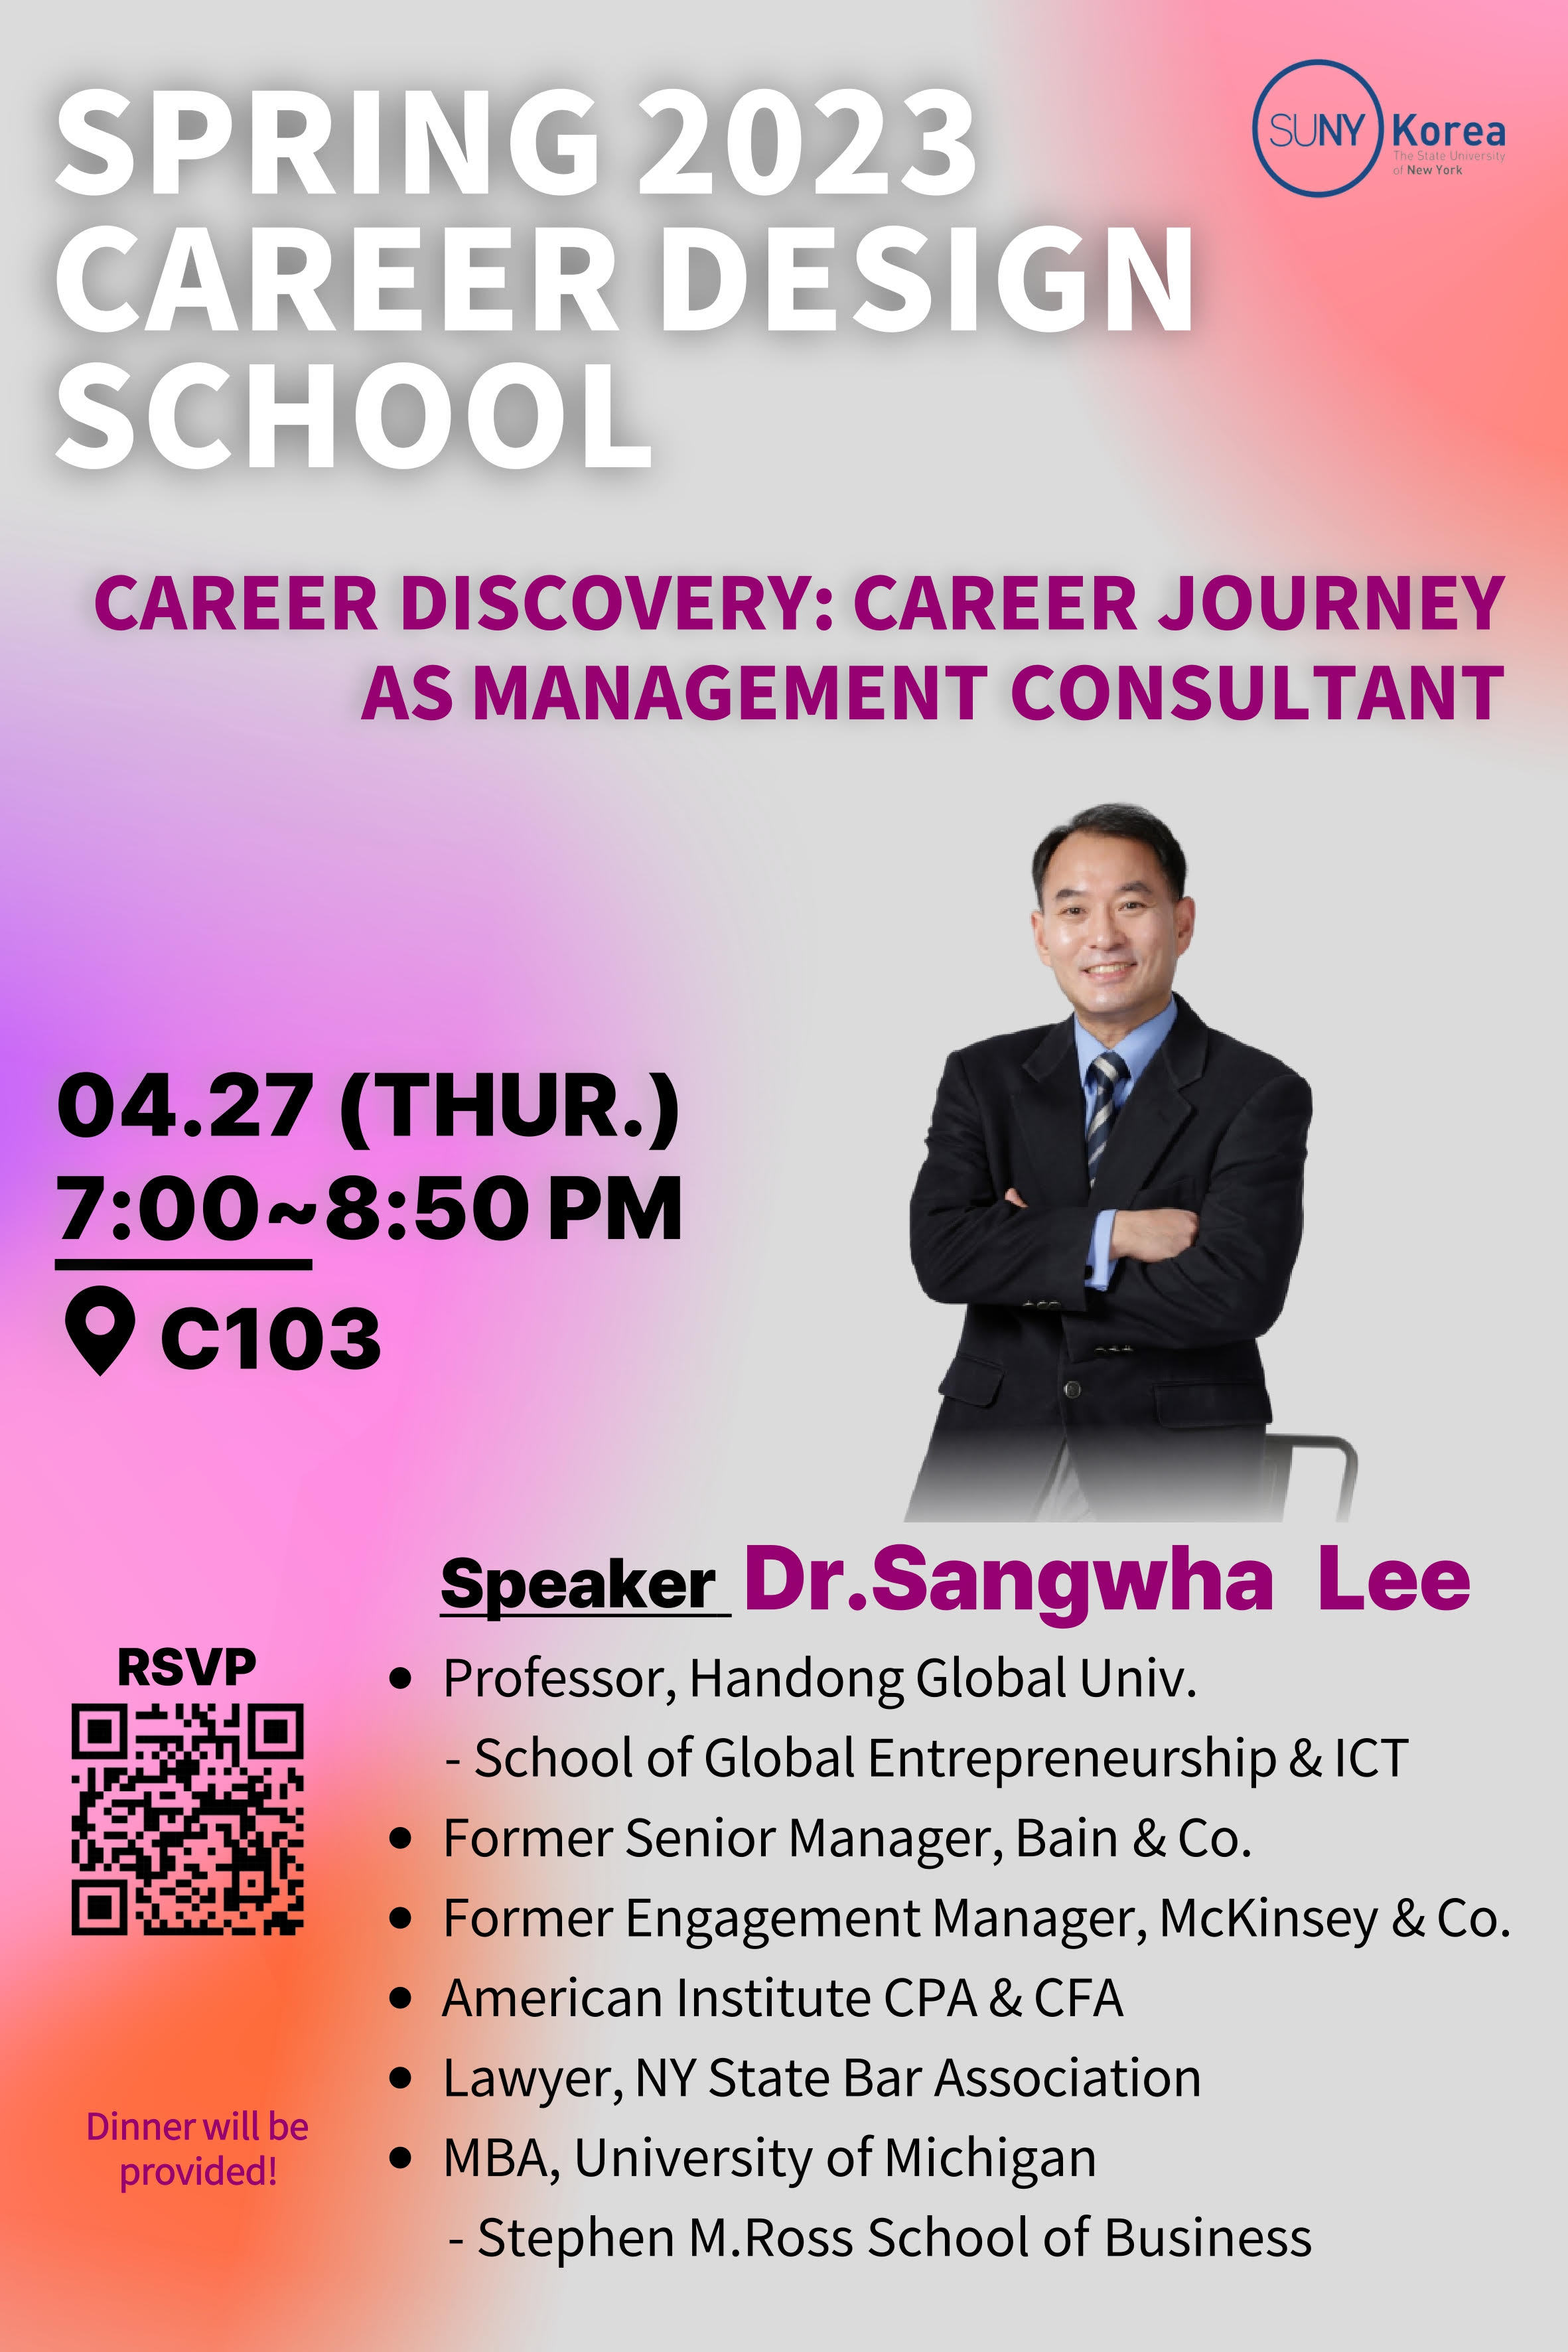 SUNY Korea SPRING 2023 CAREER DESIGN SCHOOL CAREER DISCOVERY: CAREER JOURNEY AS MANAGEMENT CONSULTANT 04.27(THUR.) 7:00~8:50PM C103. RSVP QR(https://me-qr.com/ko/4fiA6FUv) Speaker Dr.Sangwha Lee -Professor, Handong Global Univ. School of Global Entrepreneurship & ICT. Former Senior Manager, Bain & Co. Former Engagement Manager, Mckinsey & Co. American Institute CPA & CFA. Lawyer, NY State Bar Association. MBA, University of Michigan-Stephen M.Ross School of Business